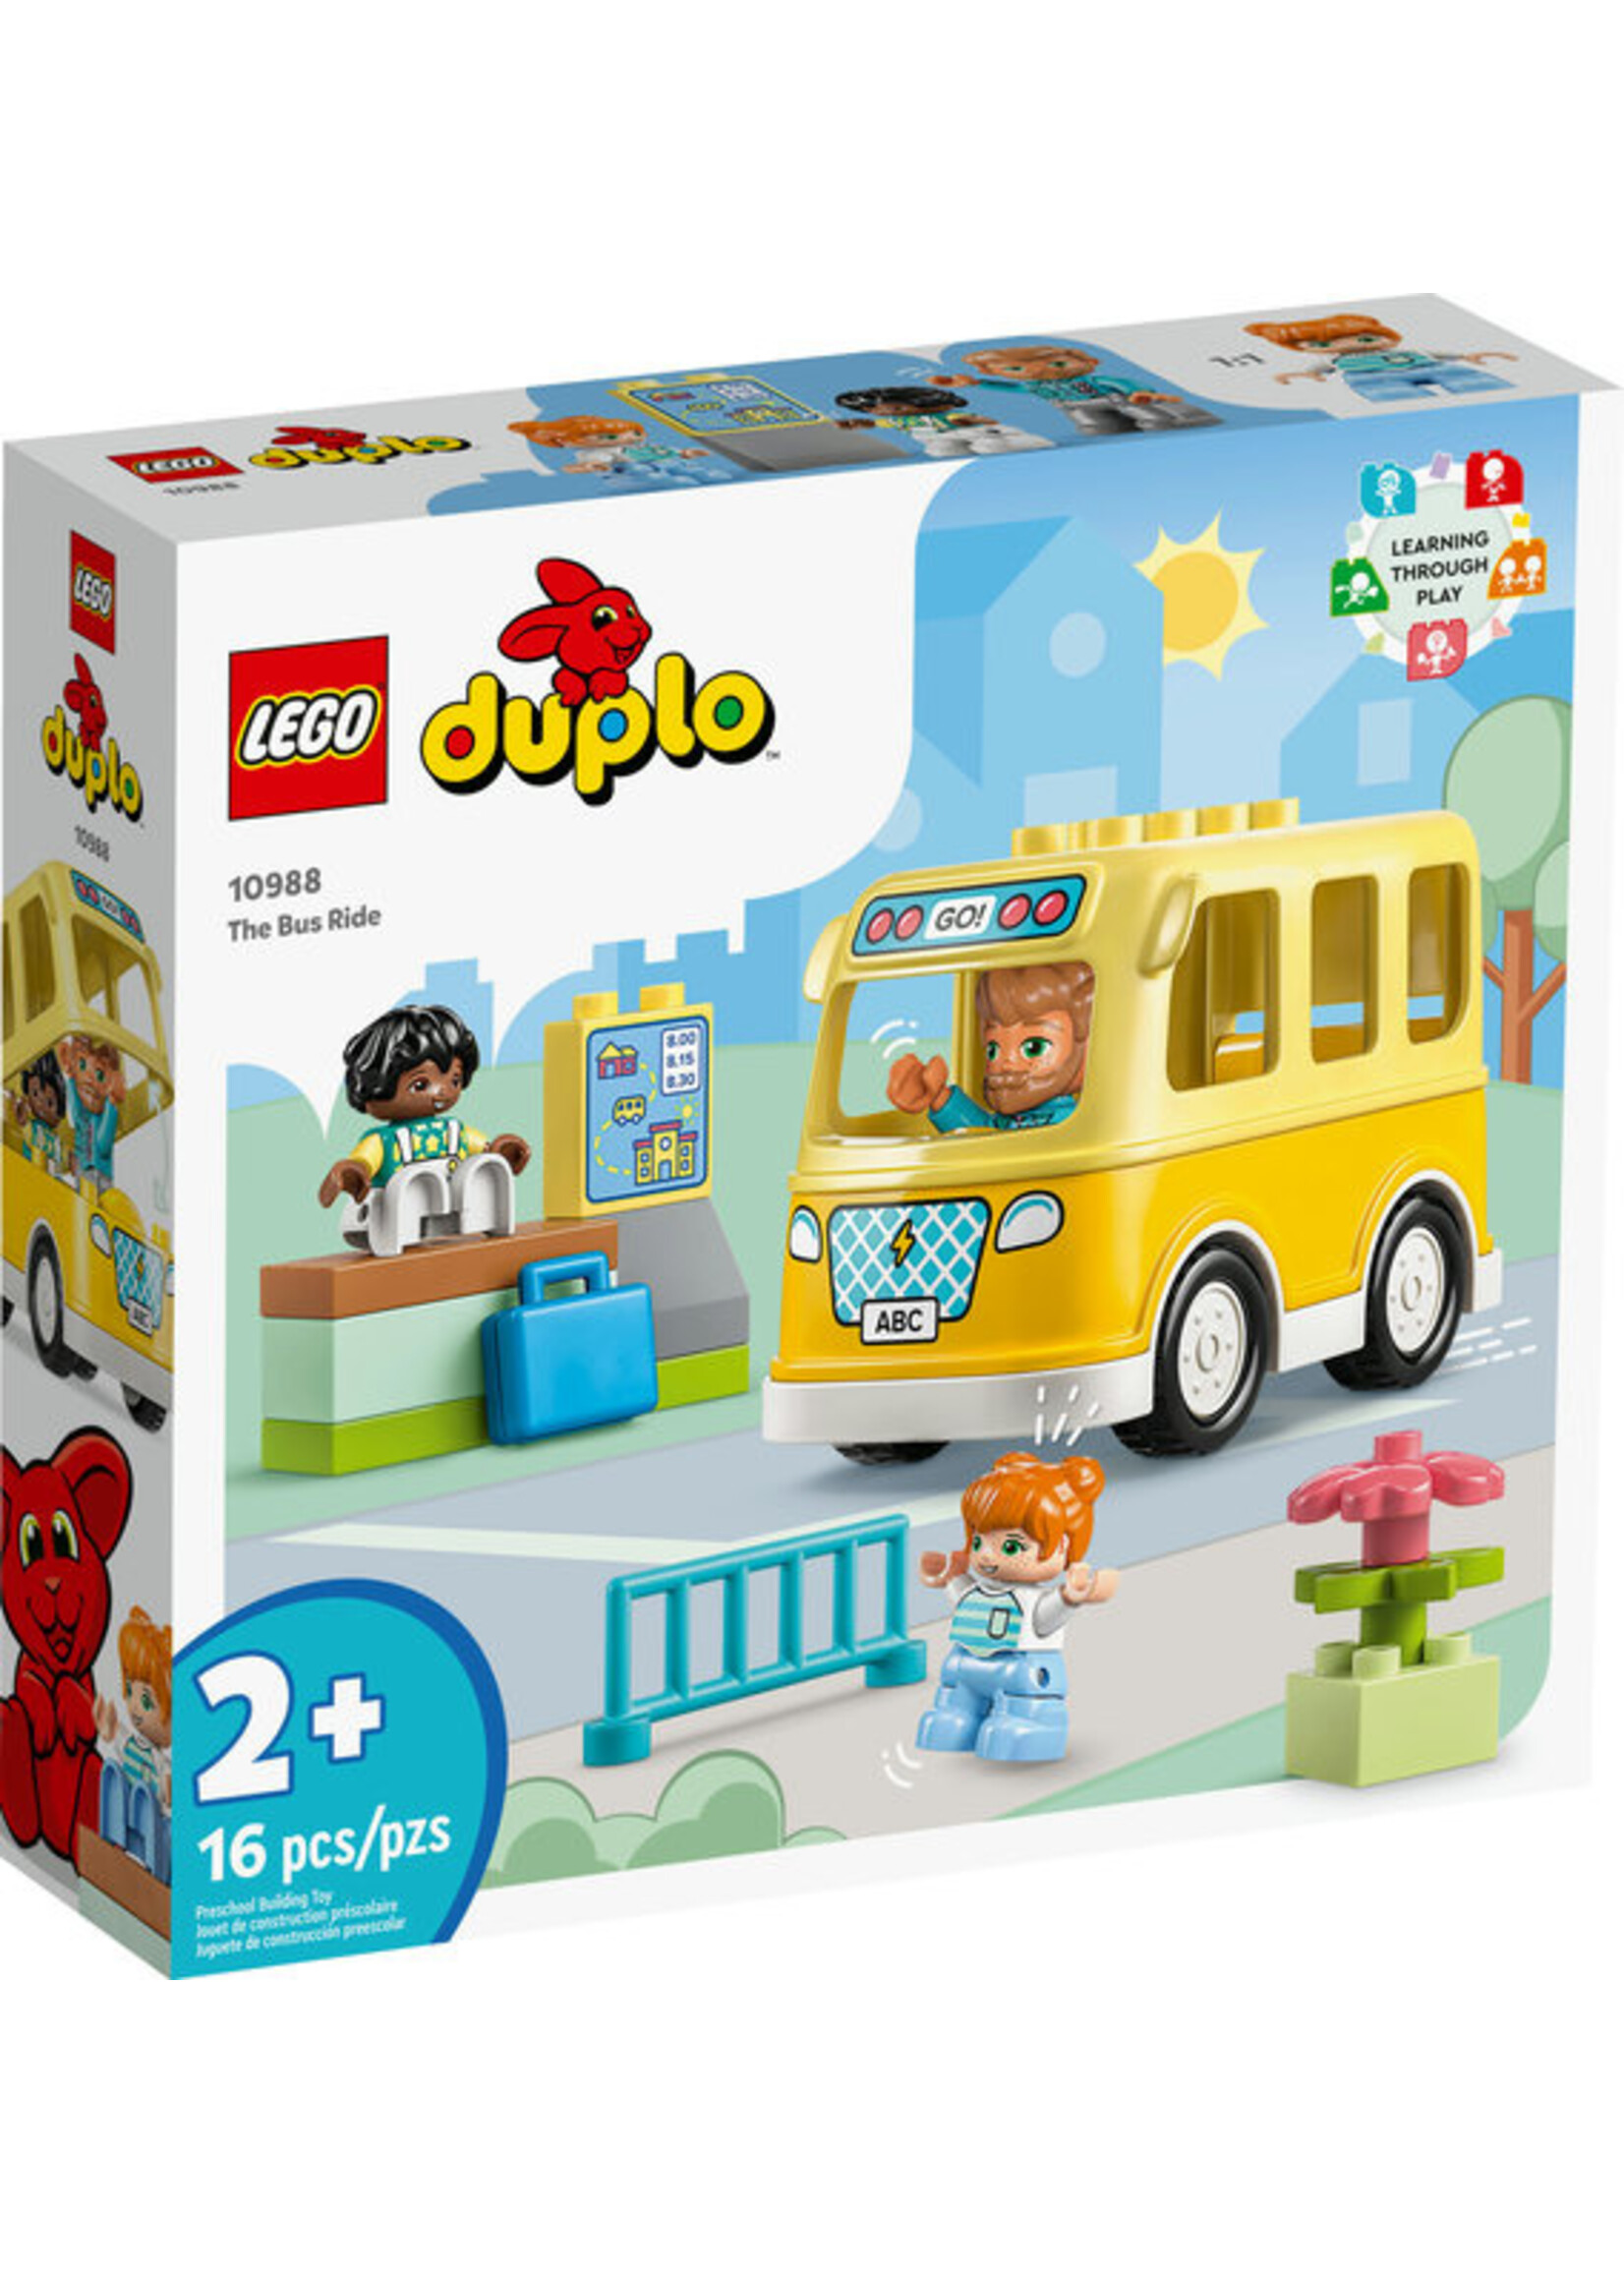 LEGO 10988 - The Bus Ride